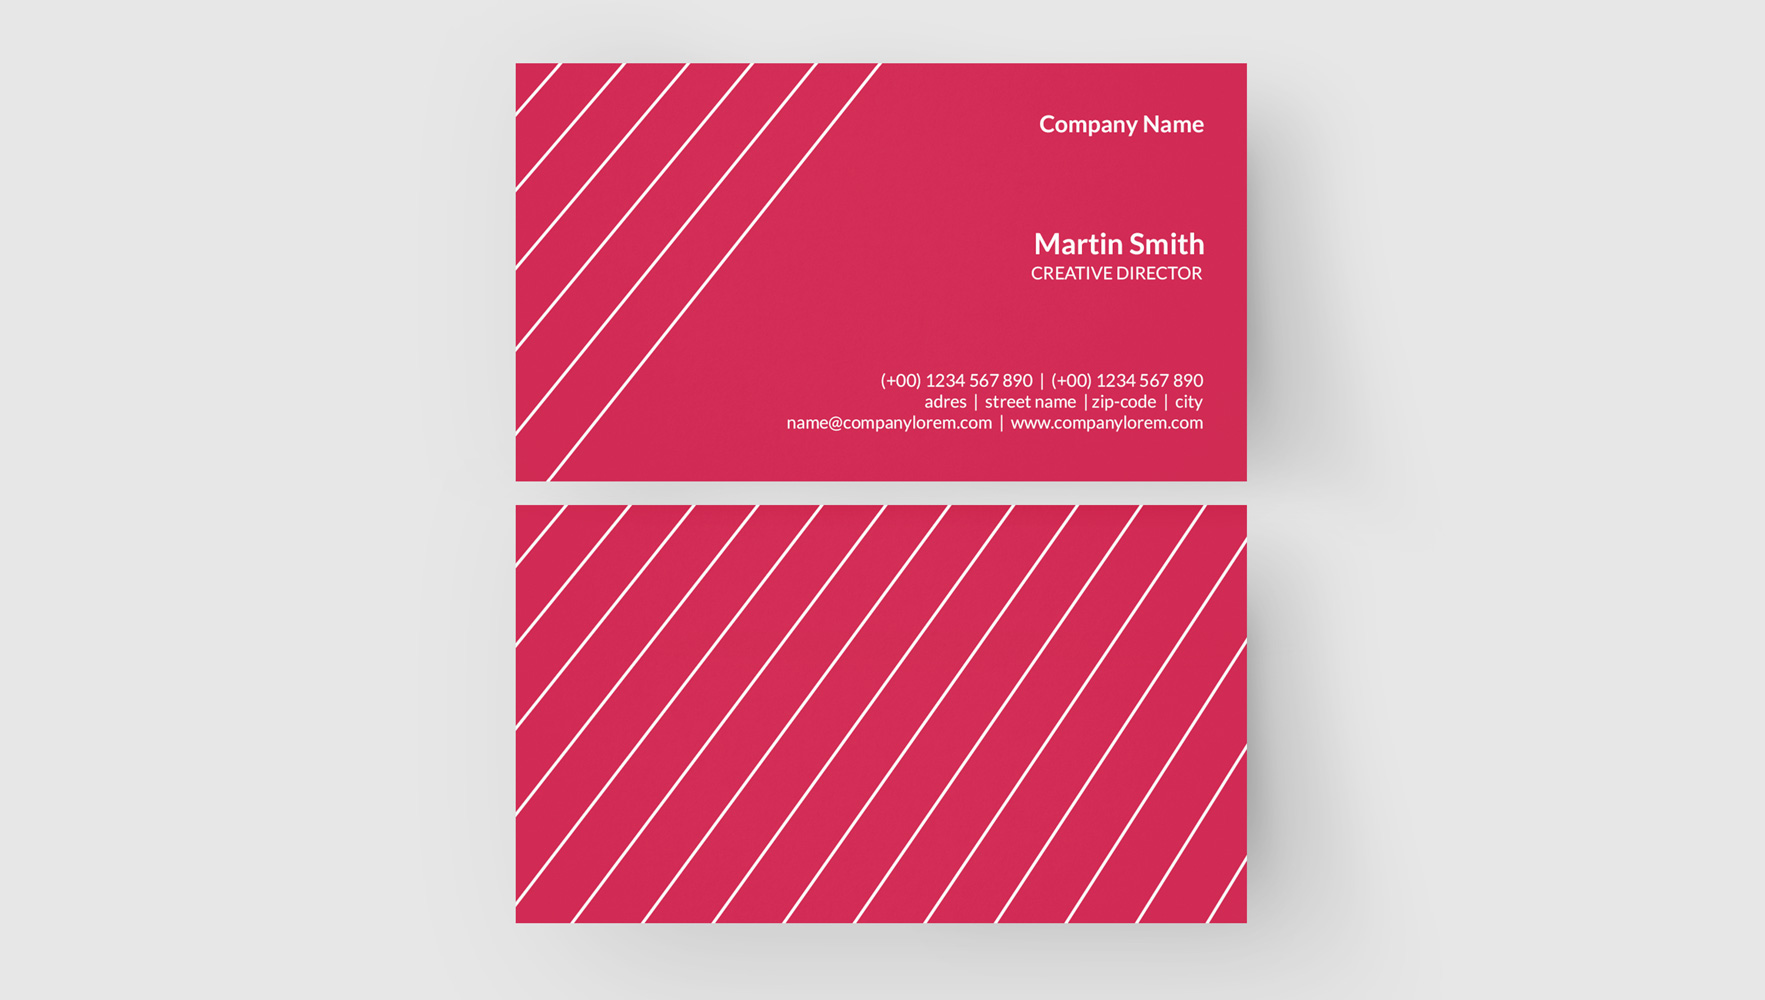 business-card-template-coreldraw-alfaera-coreldraw-graphic-design-templates